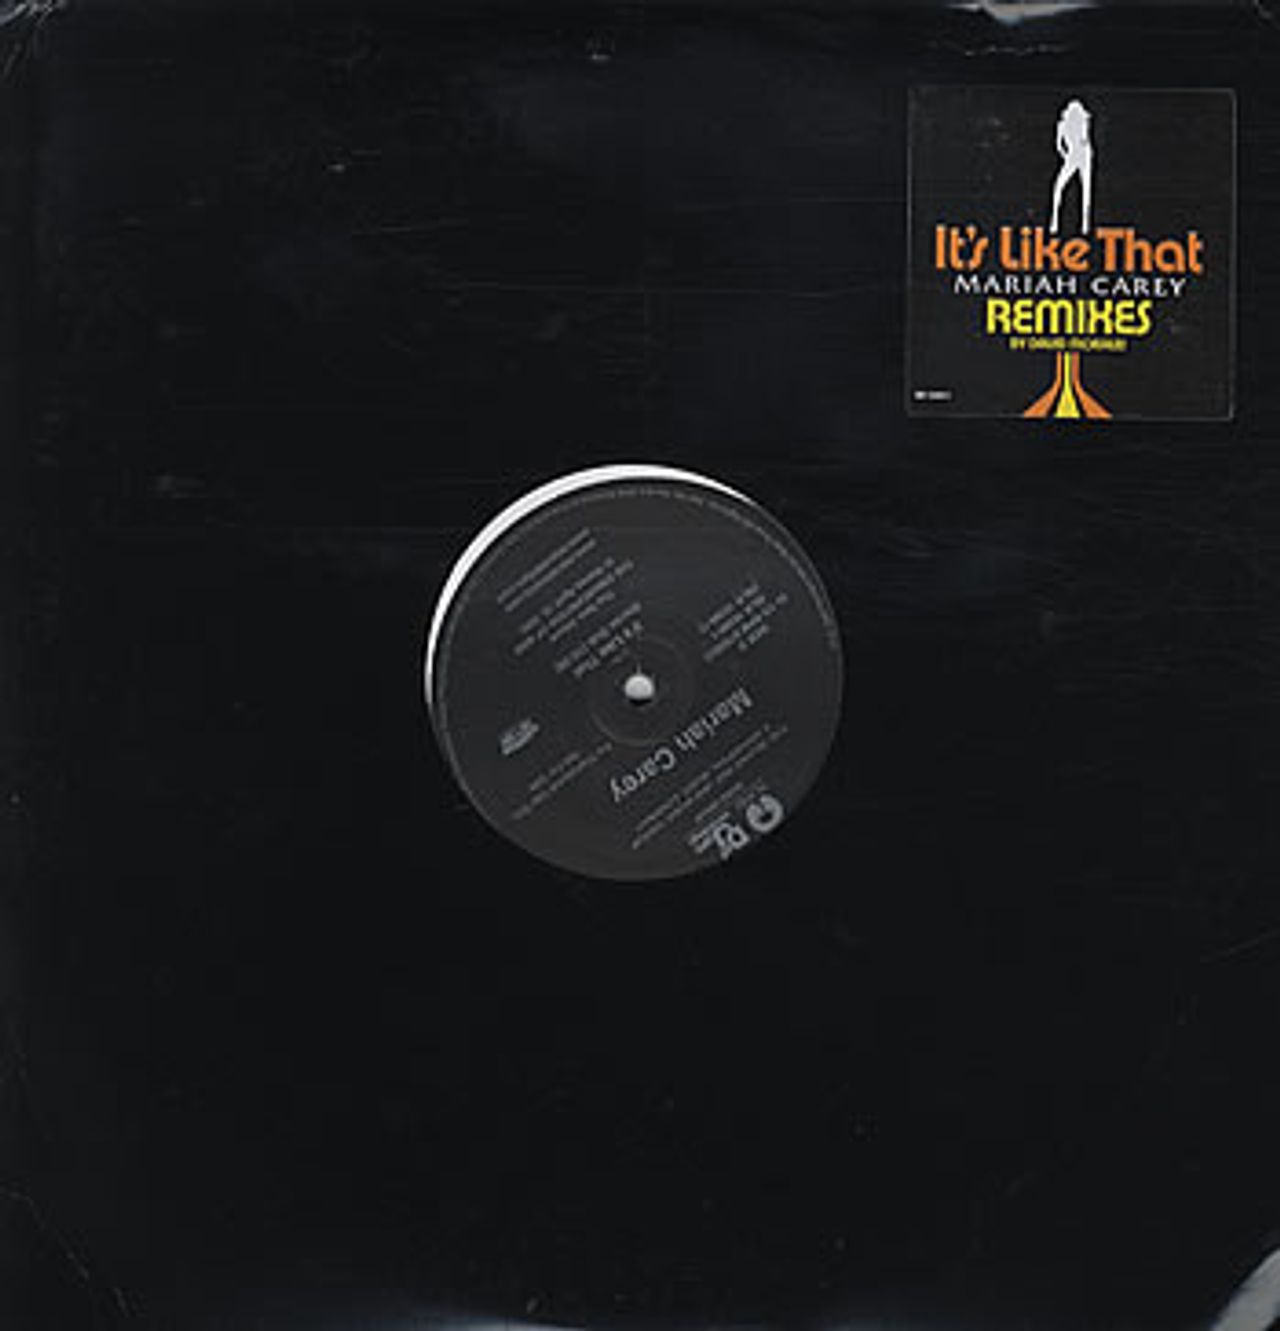 Mariah Carey It's Like That - Remixes US Promo 12" vinyl single (12 inch record / Maxi-single) ISLR-16286-1